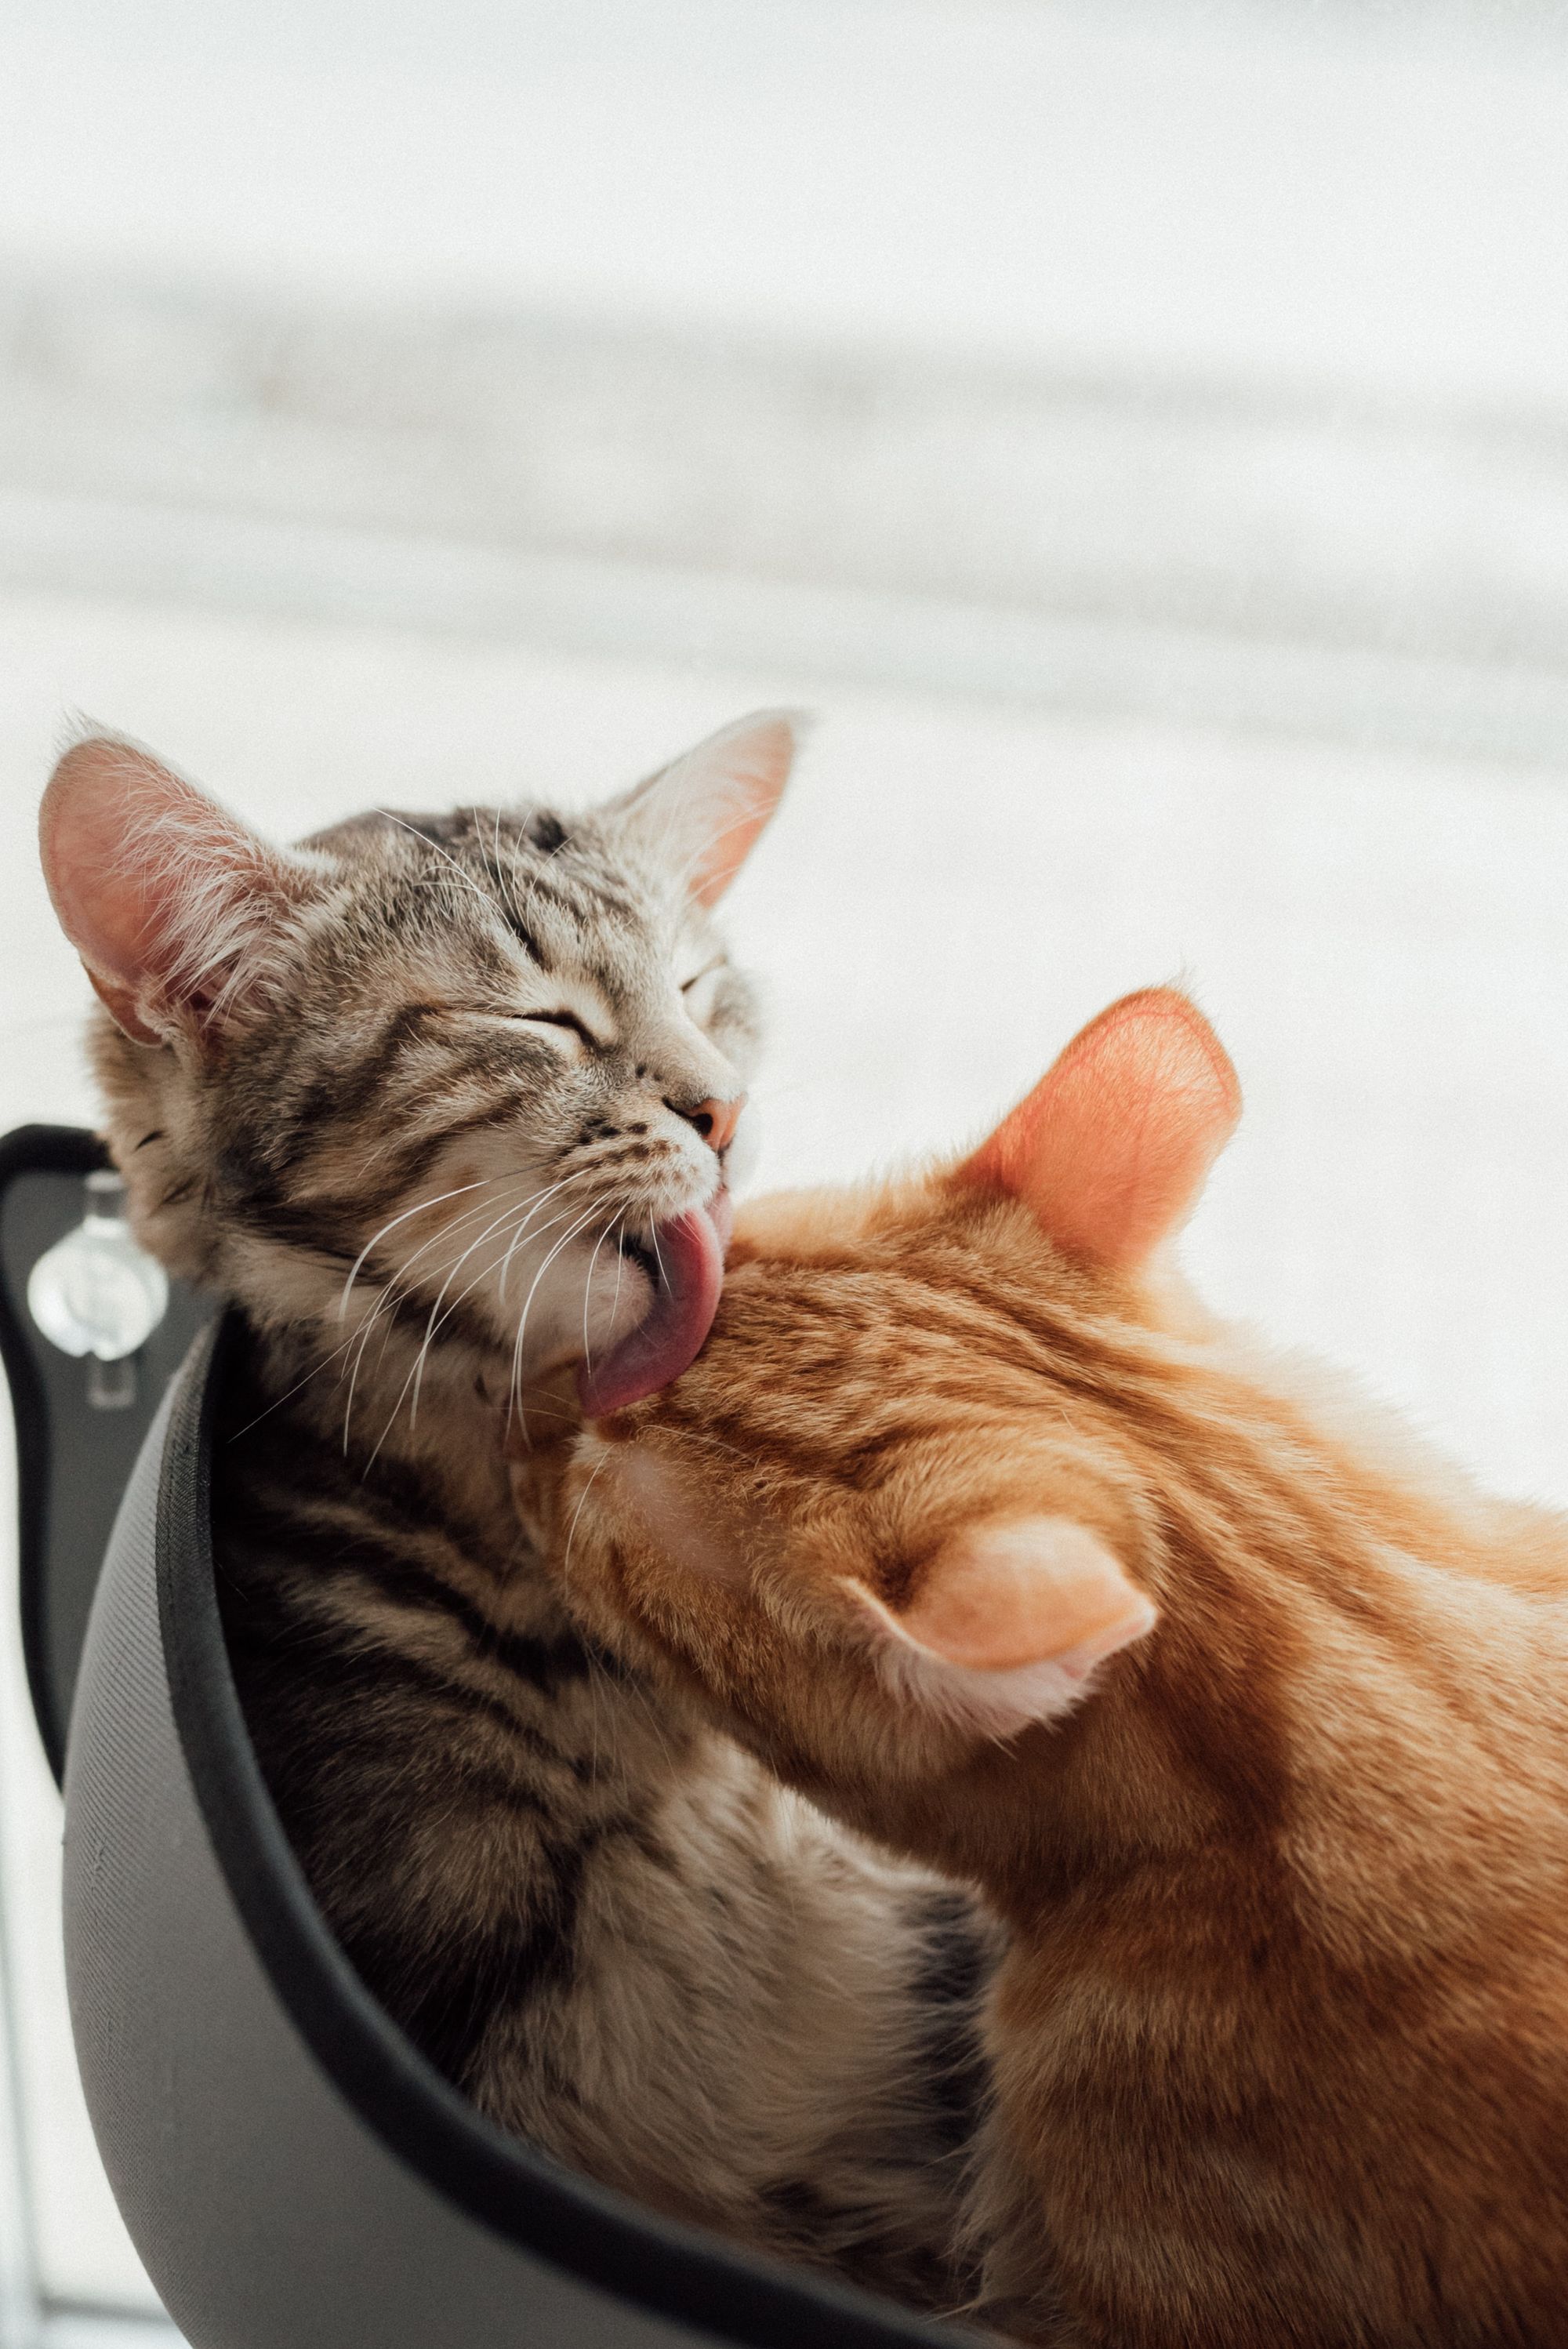 Cats Licking Image